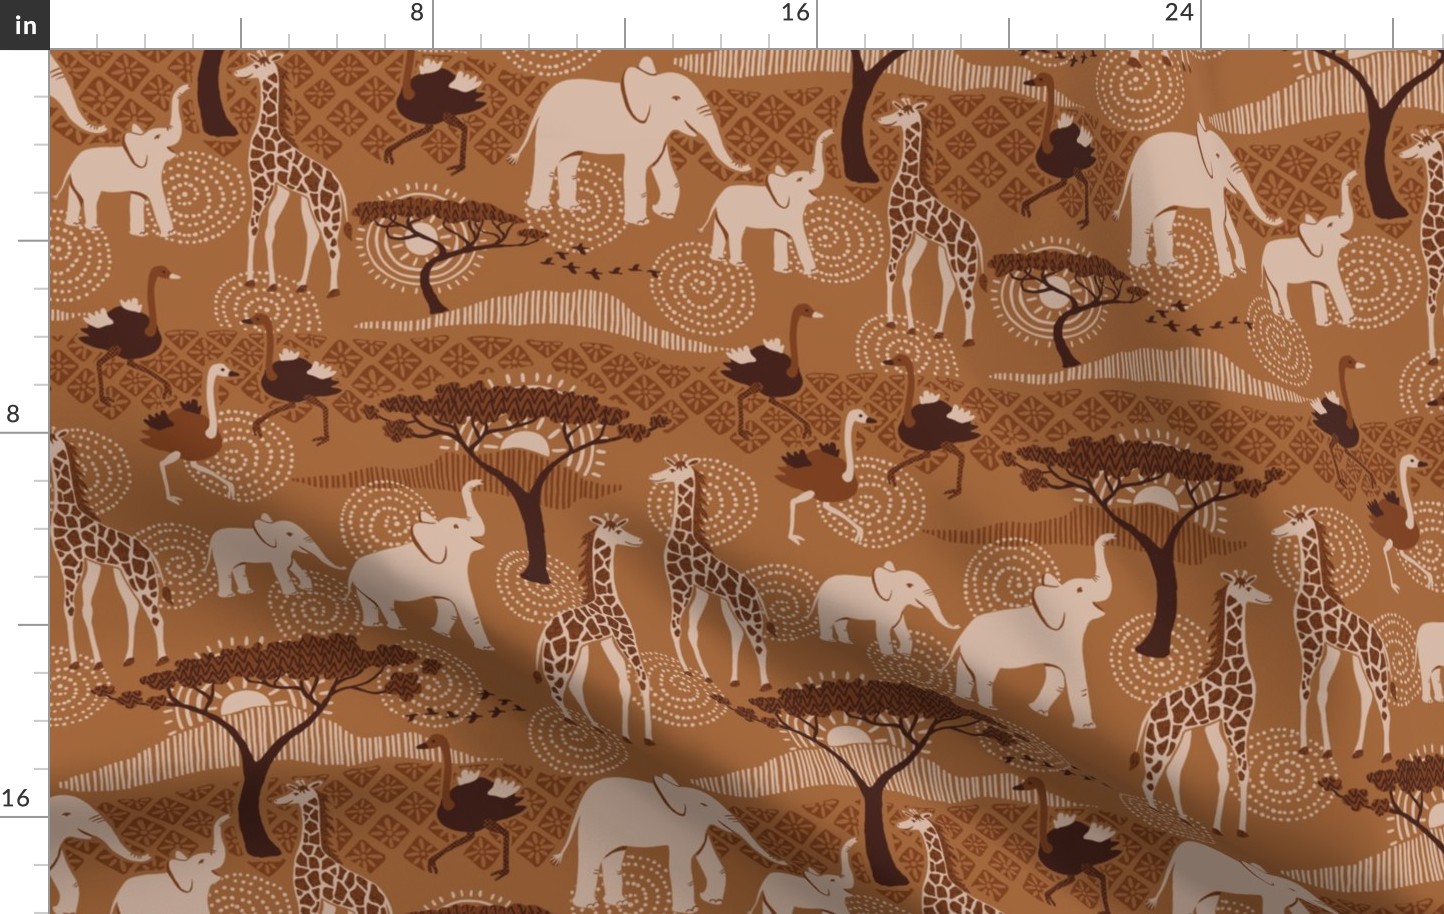 Earth tone safari with elephants, giraffes and ostriches - medium scale